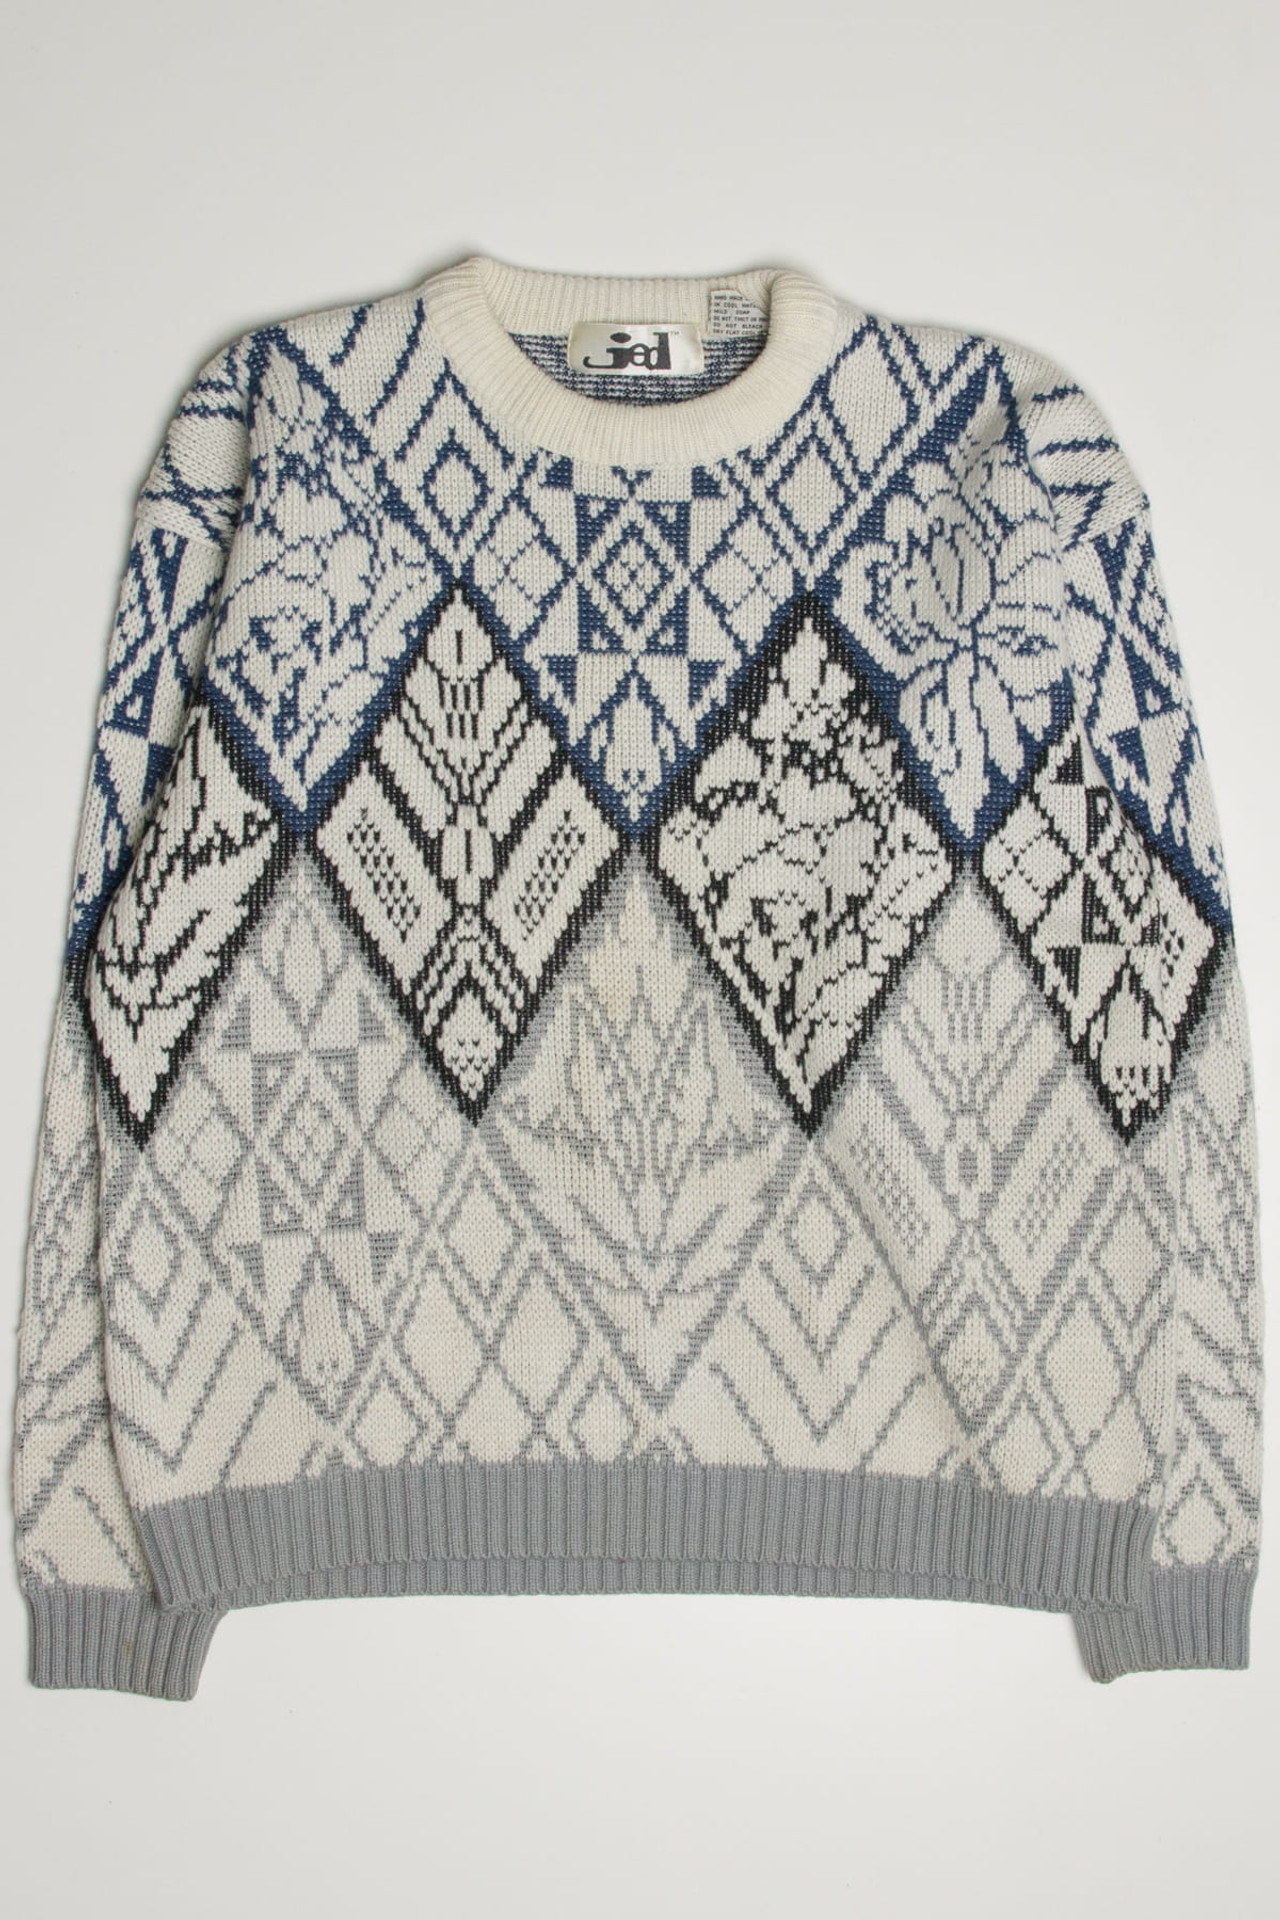 Vintage Adele 80s Sweater 3535 - Ragstock.com